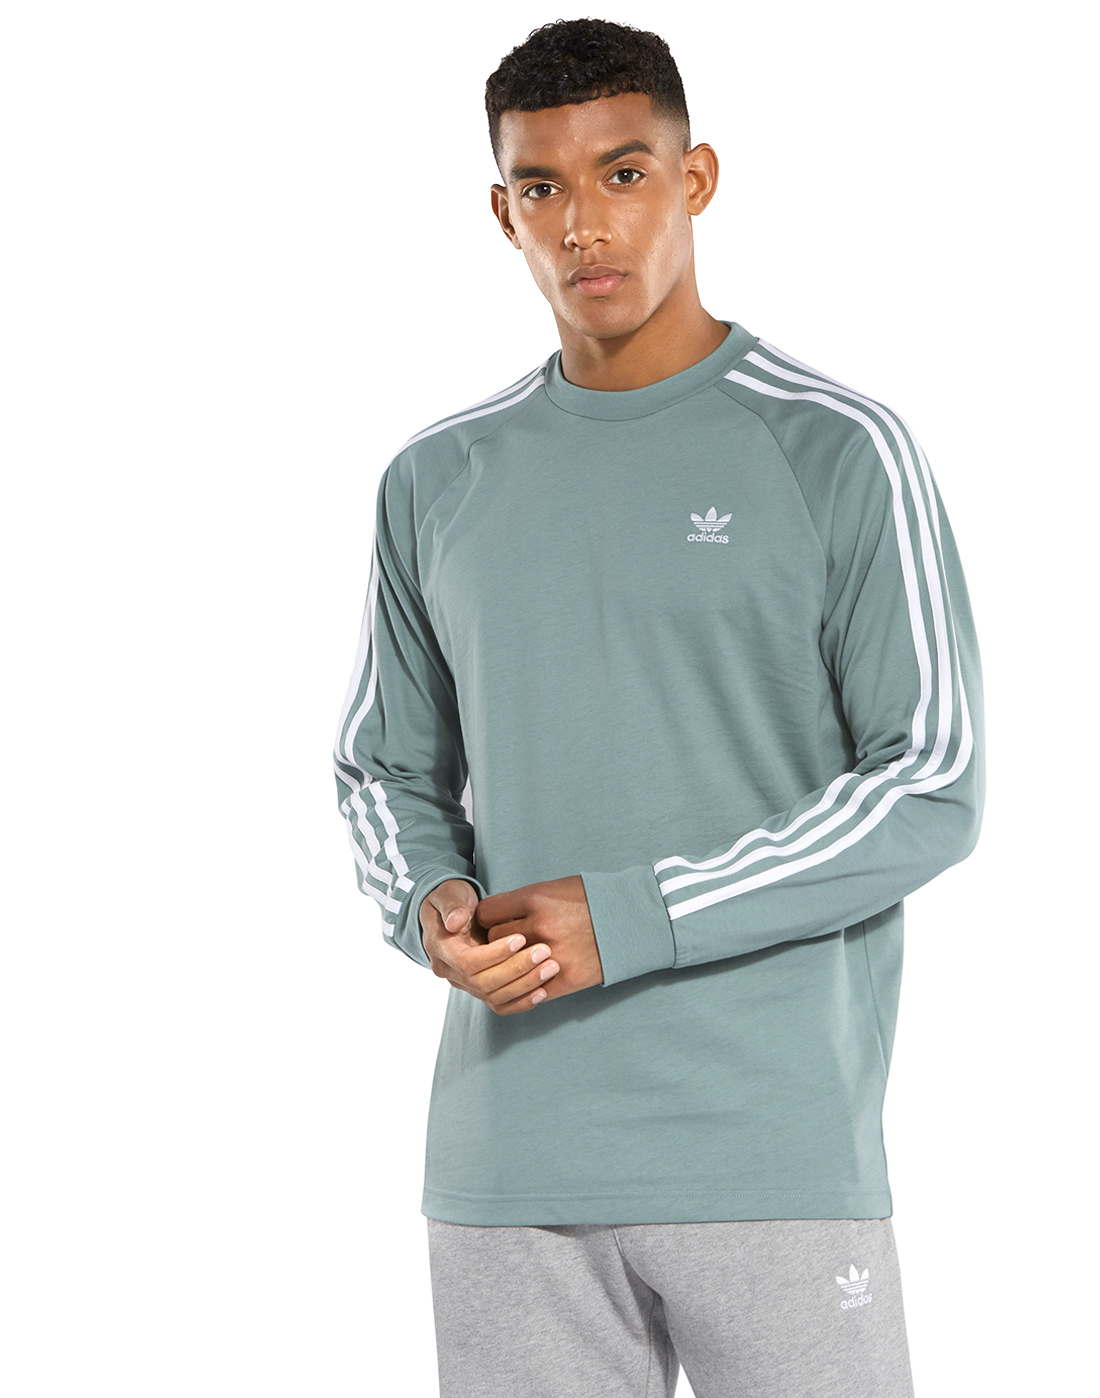 Men's Green Long Sleeve adidas Originals T-Shirt | Life Style Sports